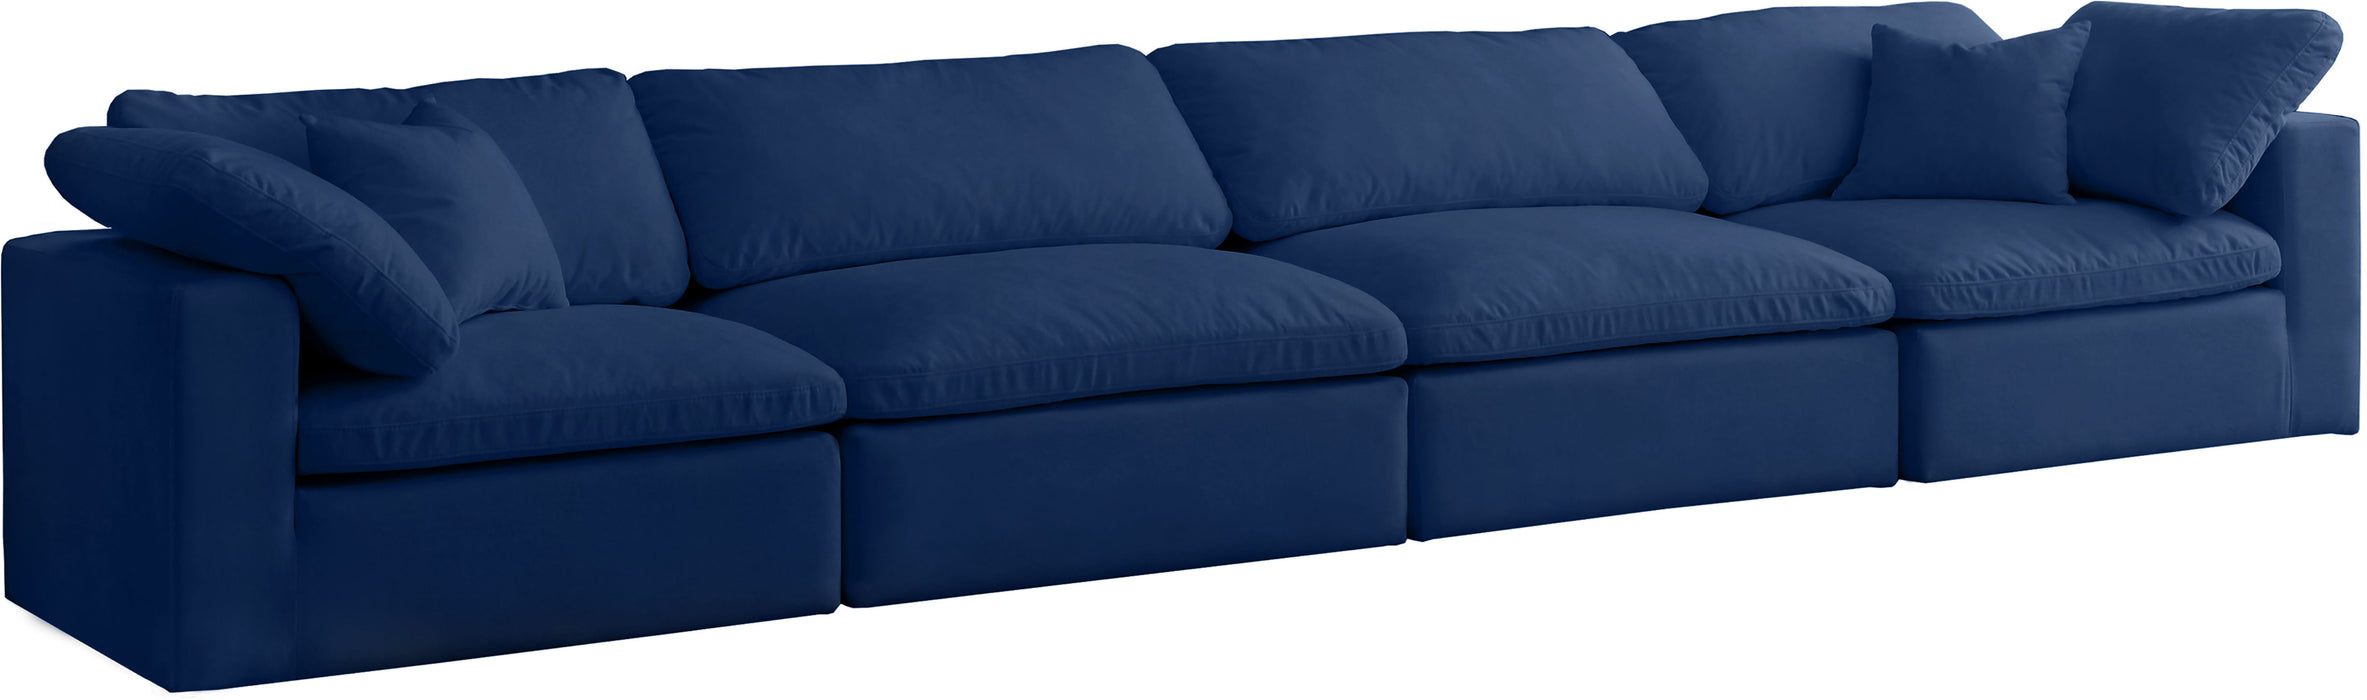 Cozy - Modular 4 Seat Sofa